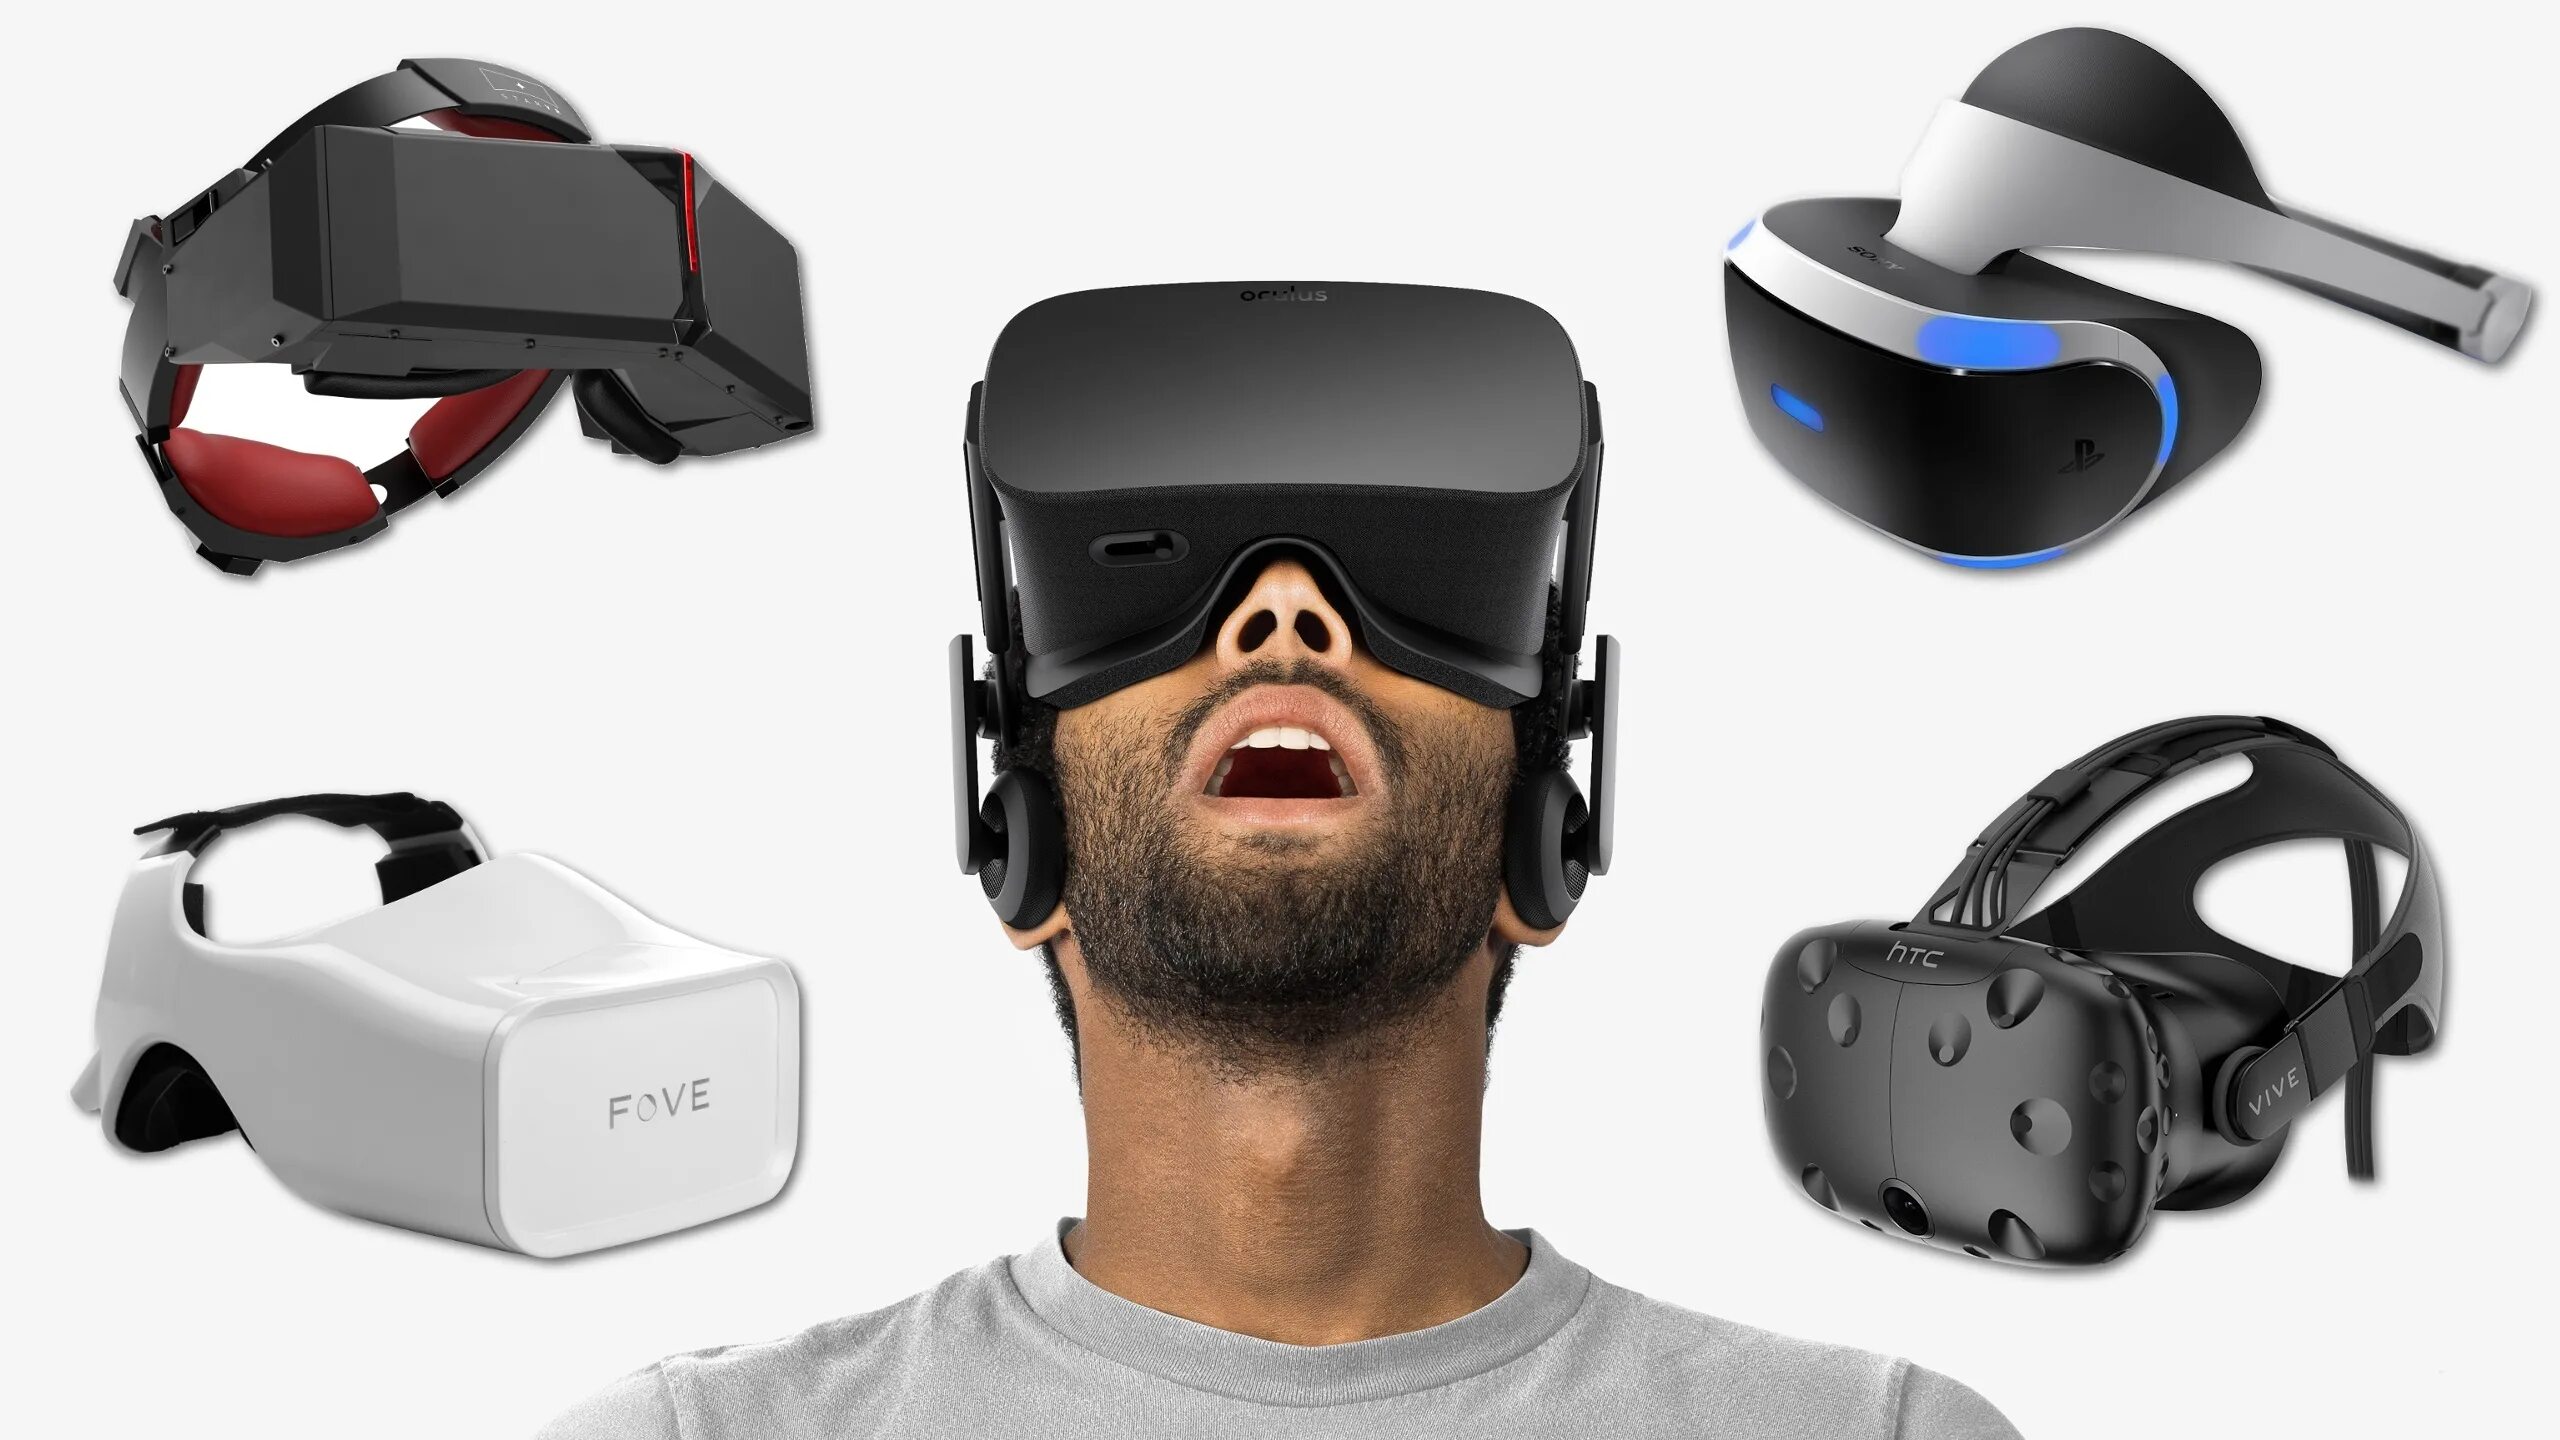 VR очки HTC Vive. Sony PLAYSTATION VR HTC Vive Oculus Rift VR. VR очки Vive Pro 2 весь комплект. PS VR 2 очки виртуальной реальности. Разработка виртуальной реальности заказать